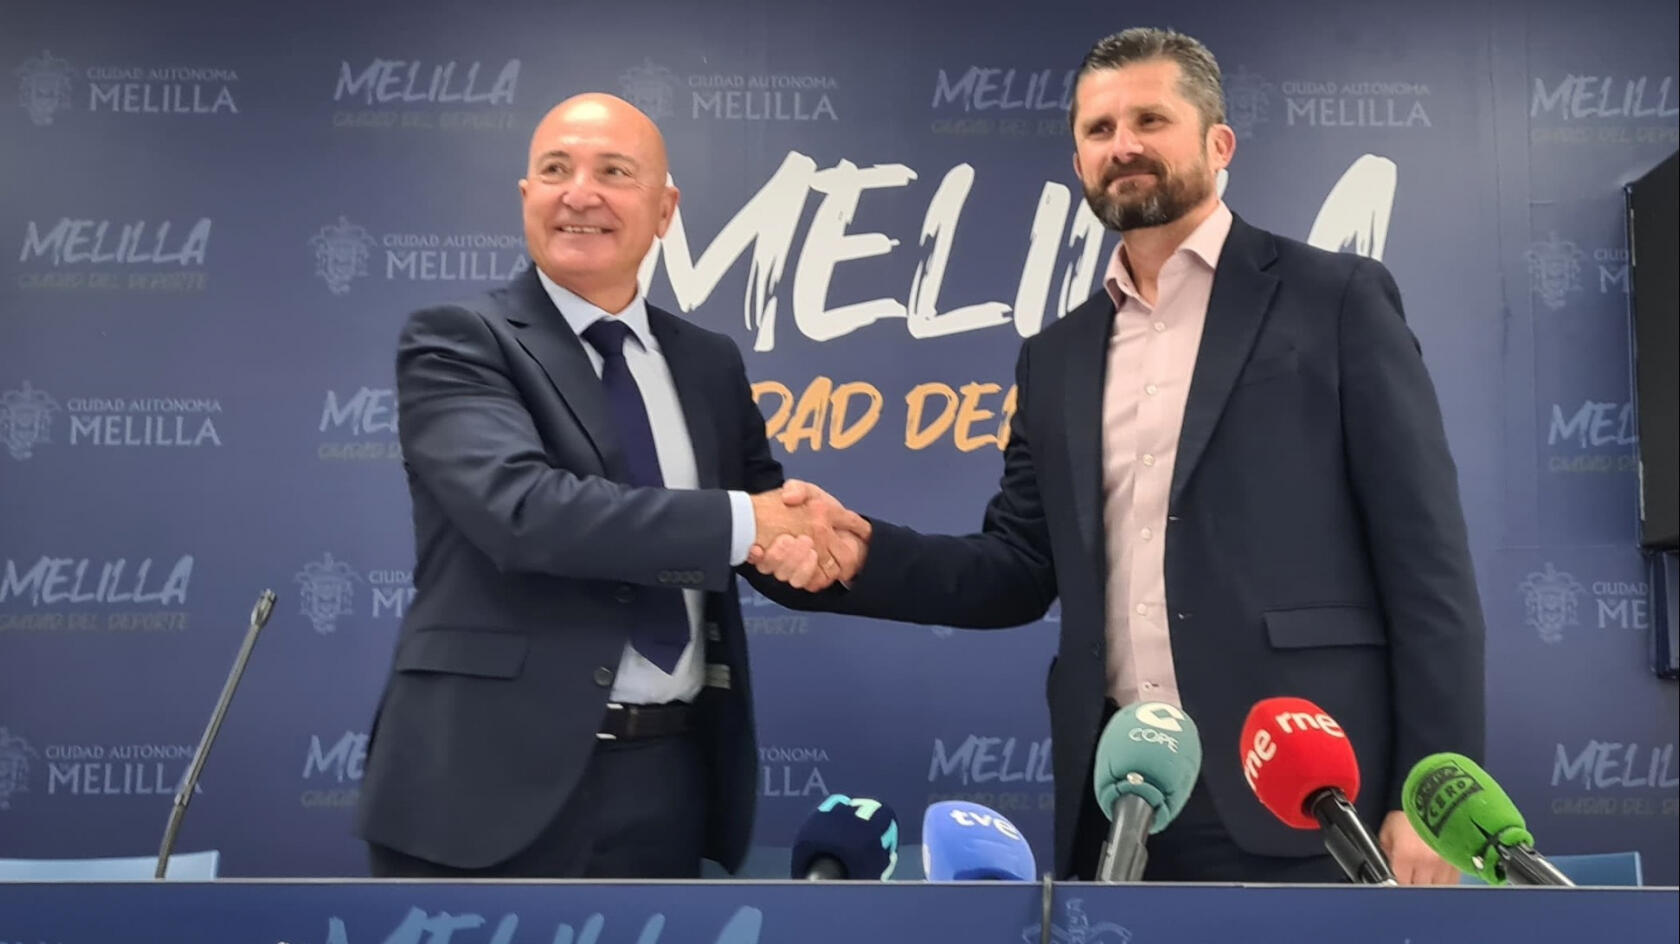 Unicaja Baloncesto and Melilla join their paths